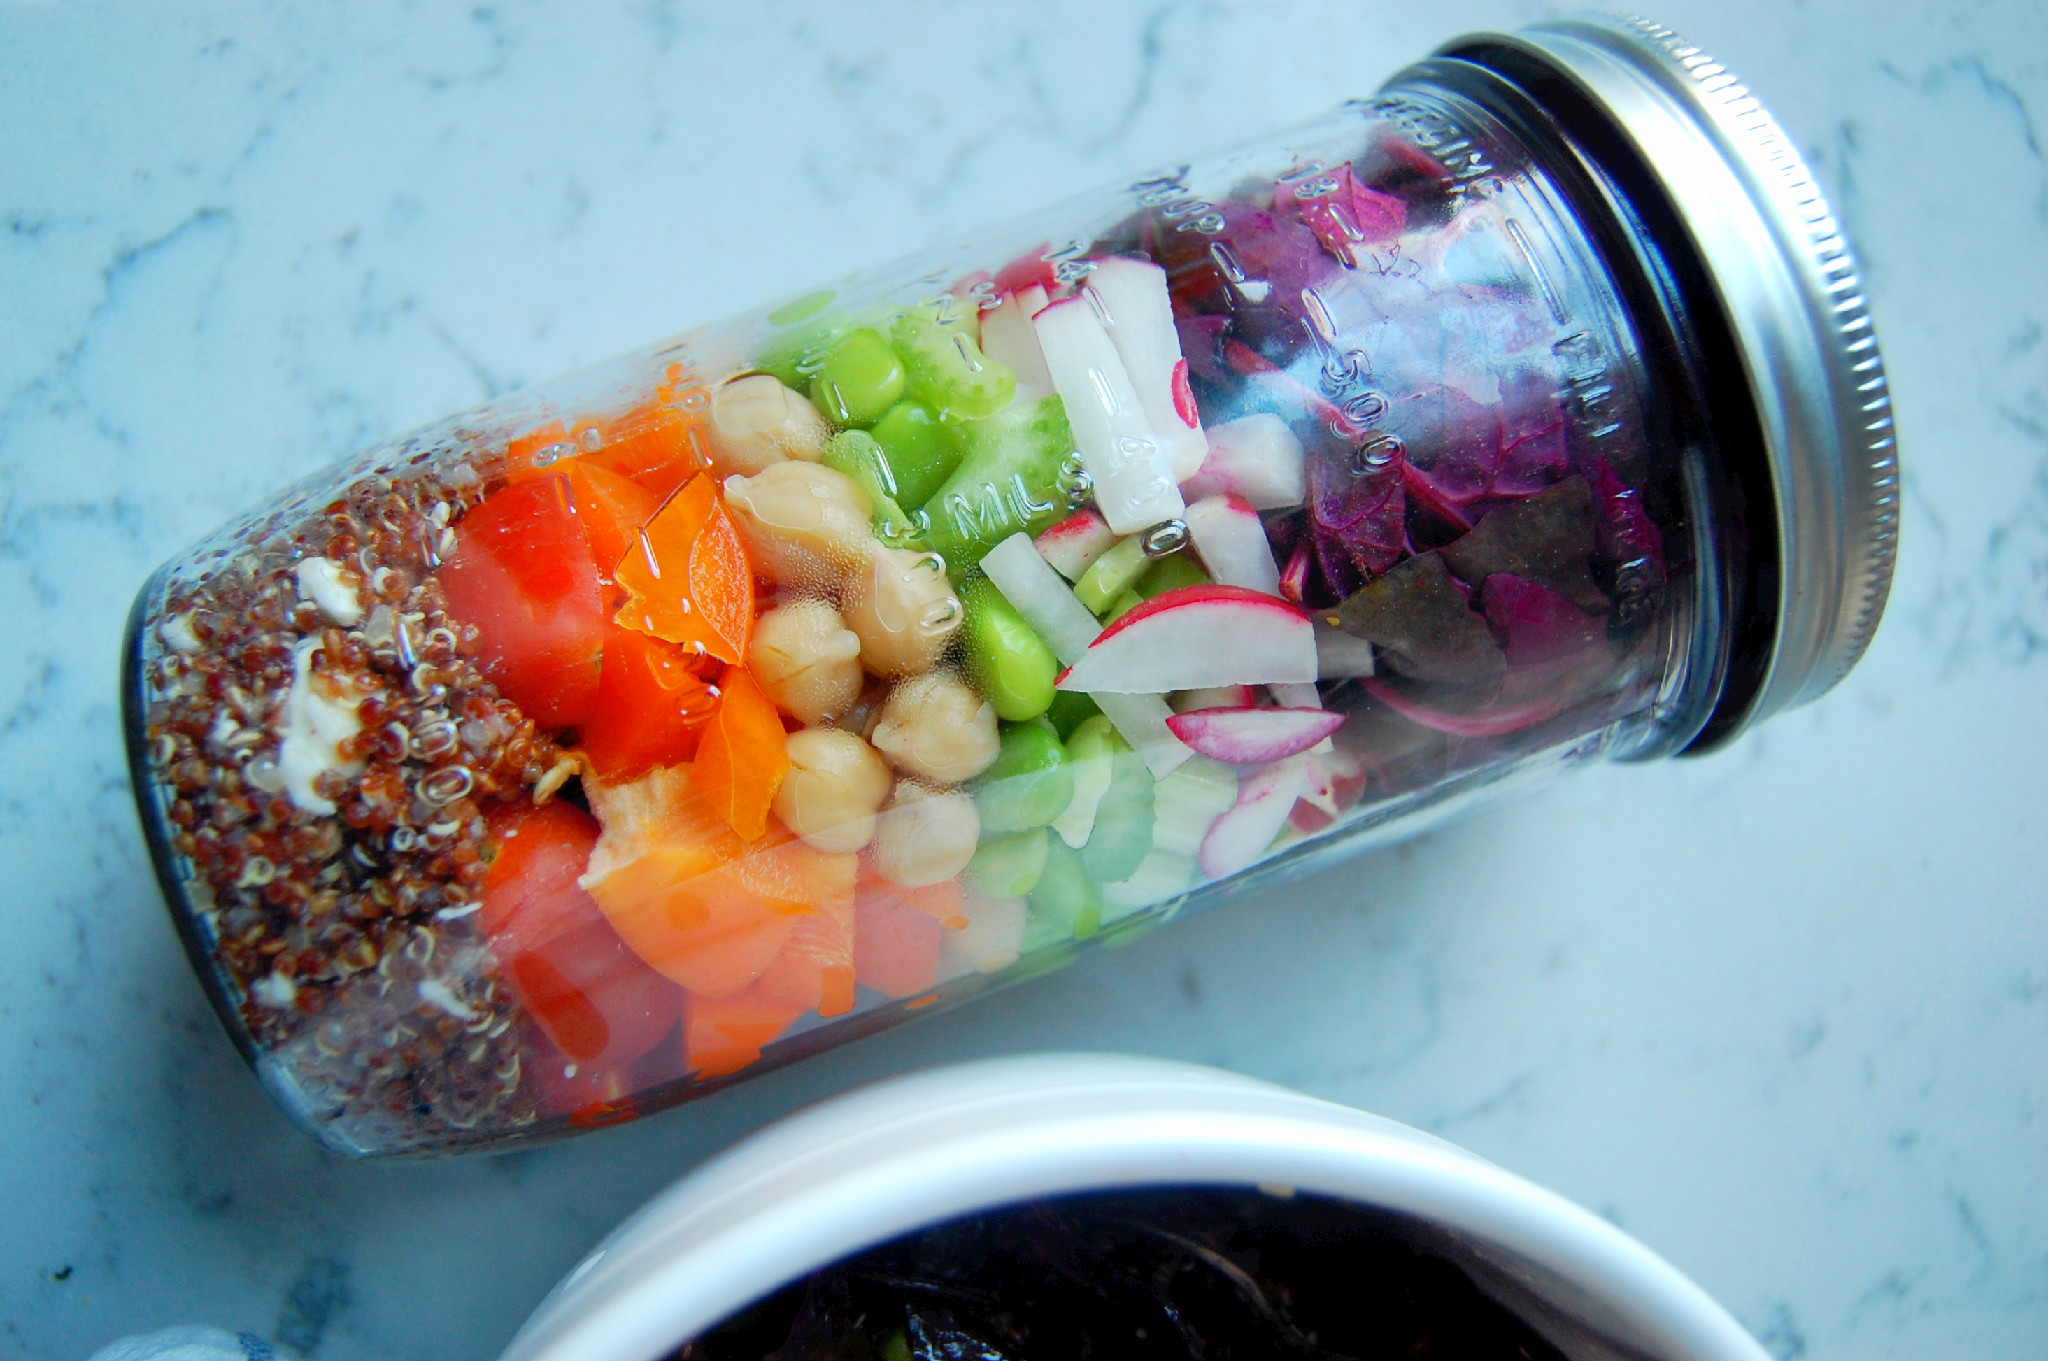 Rainbow Fruit Salad Jars Recipe - Eats Amazing.